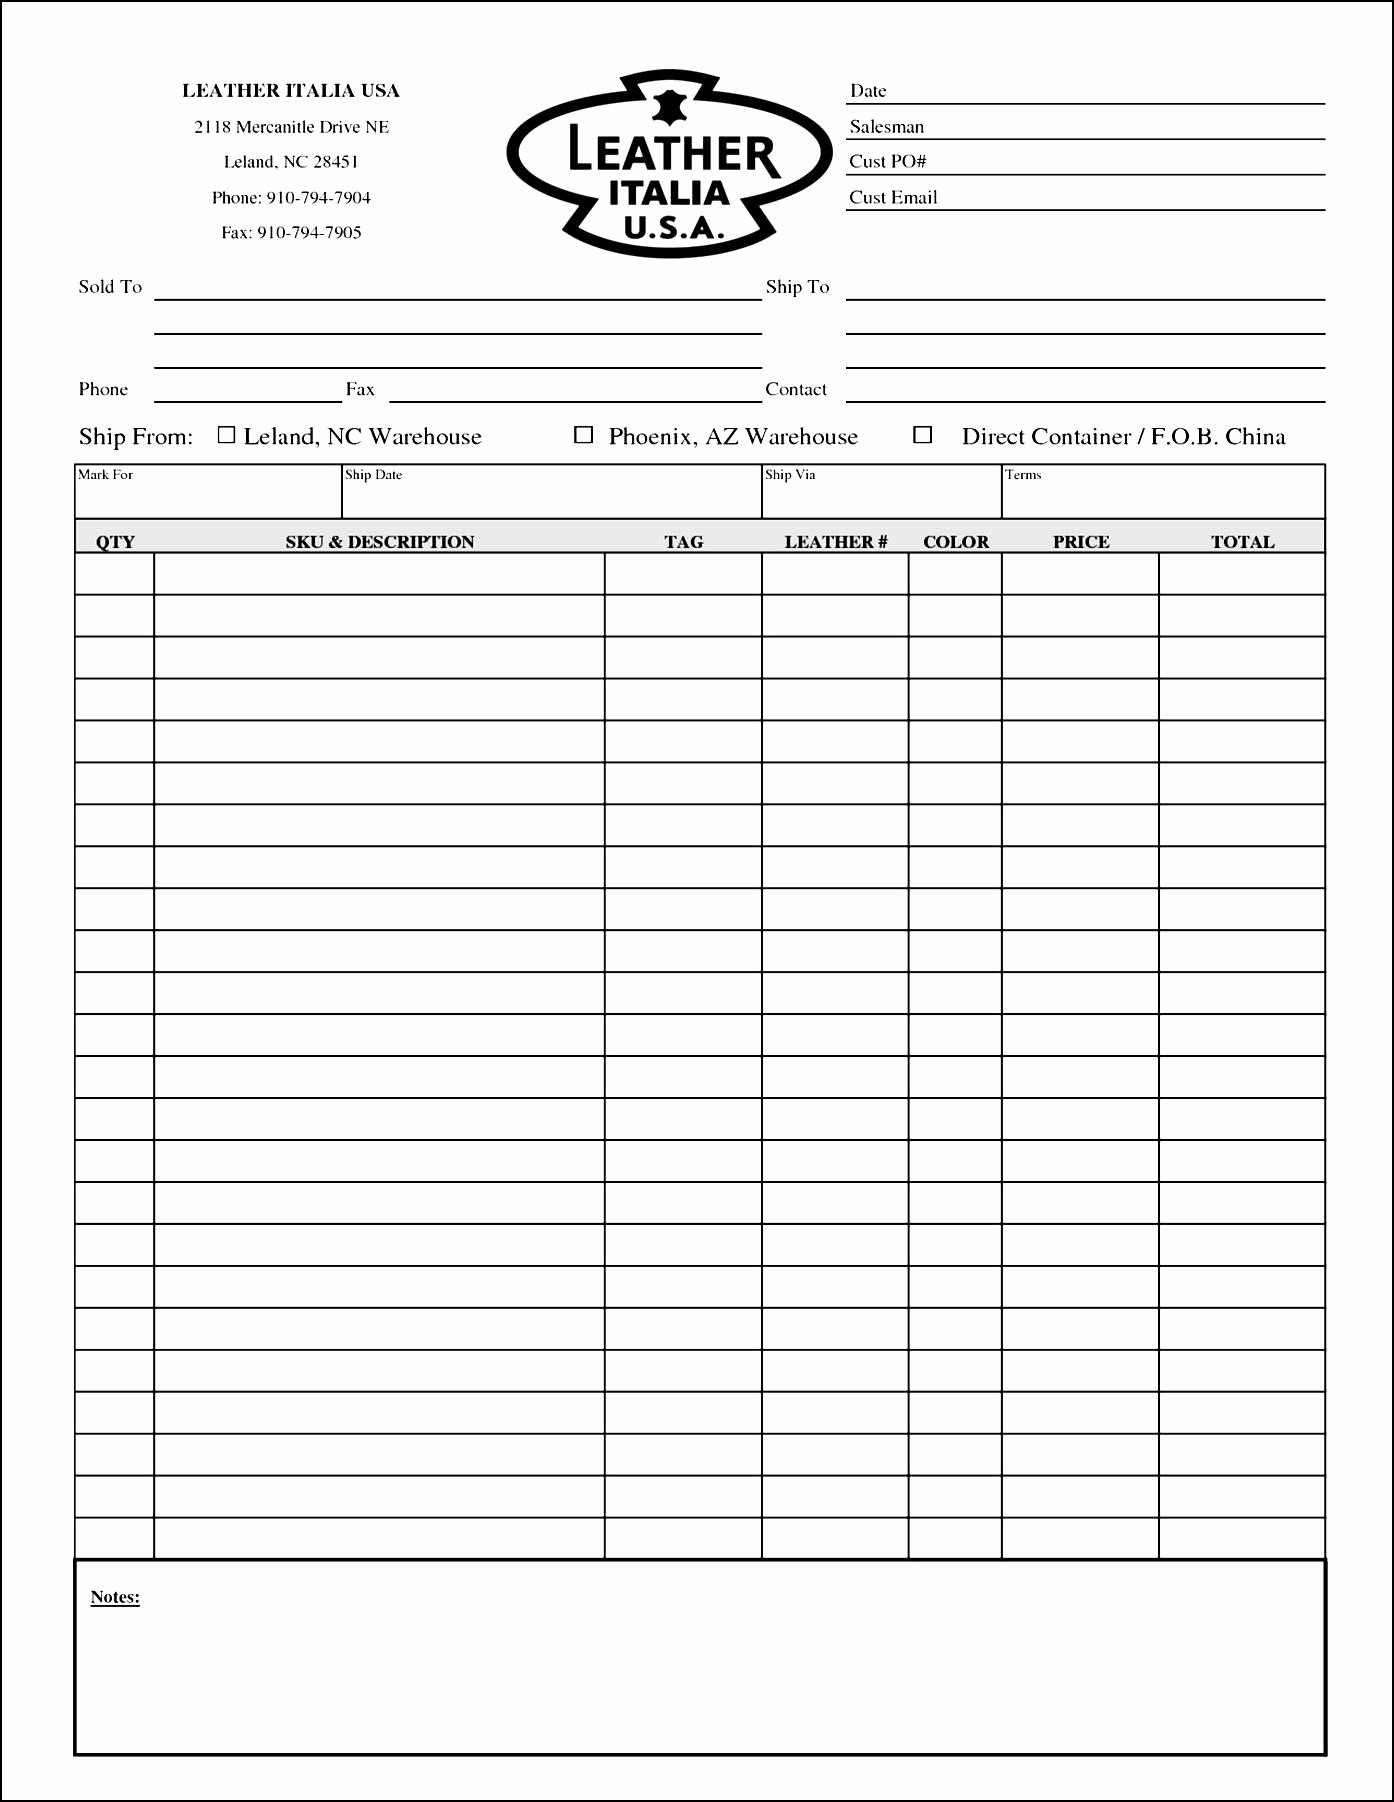 Order form Template Excel Best Of Blank order form Template Excel